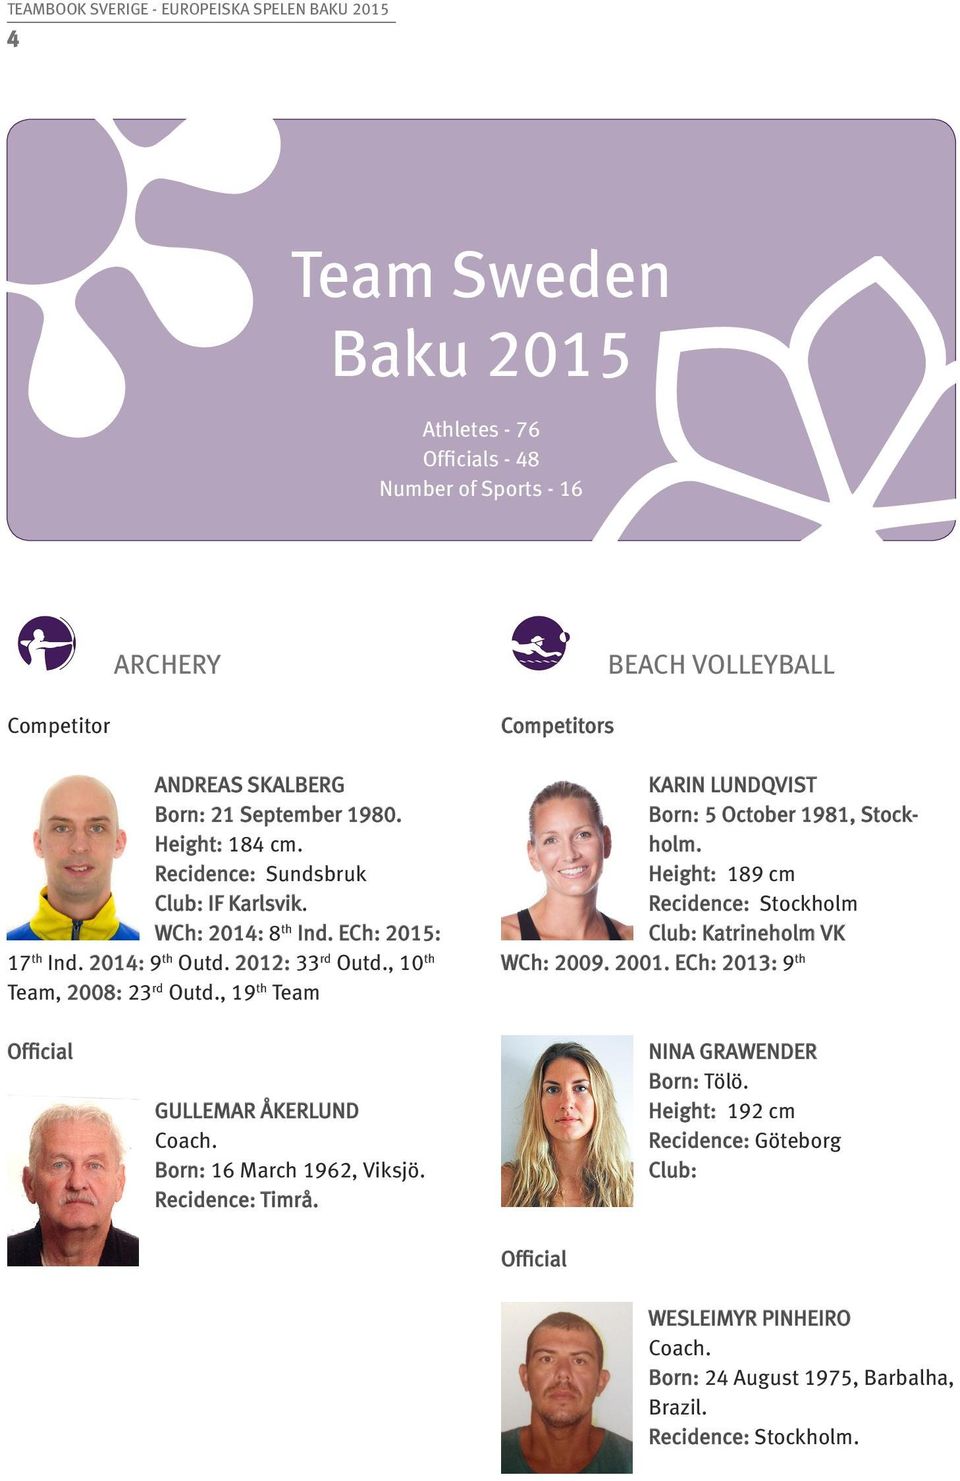 , 19 th Team Competitors KARIN LUNDQVIST Born: 5 October 1981, Stockholm. Height: 189 cm Recidence: Stockholm Club: Katrineholm VK WCh: 2009. 2001.